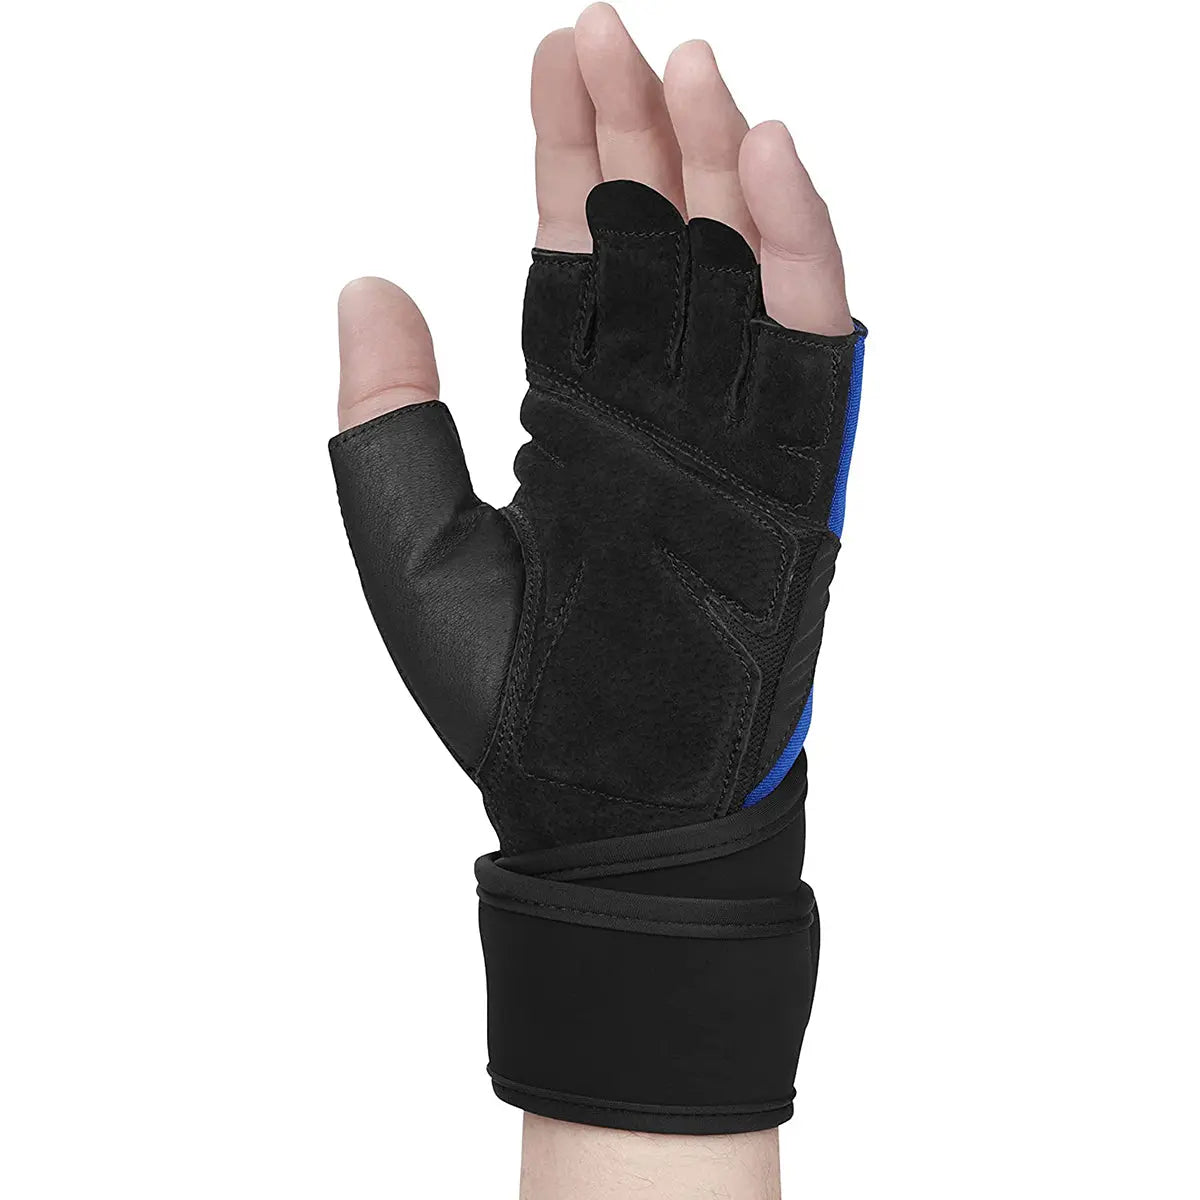 Harbinger Unisex Training Grip Wrist Wrap Weight Lifting Gloves 2.0 - Black/Blue Harbinger